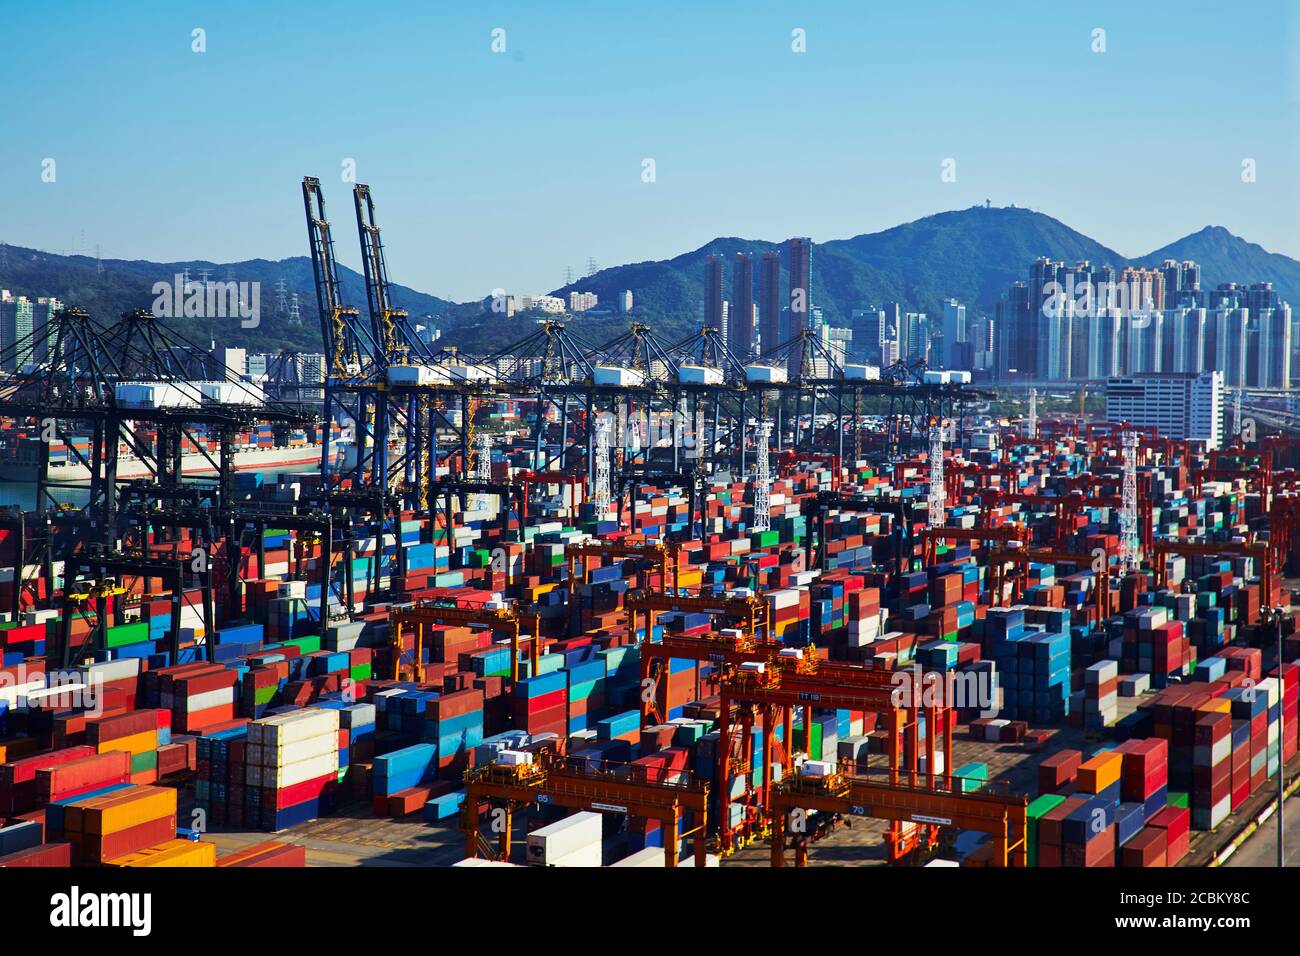 View of container port, Hong Kong, China Stock Photo